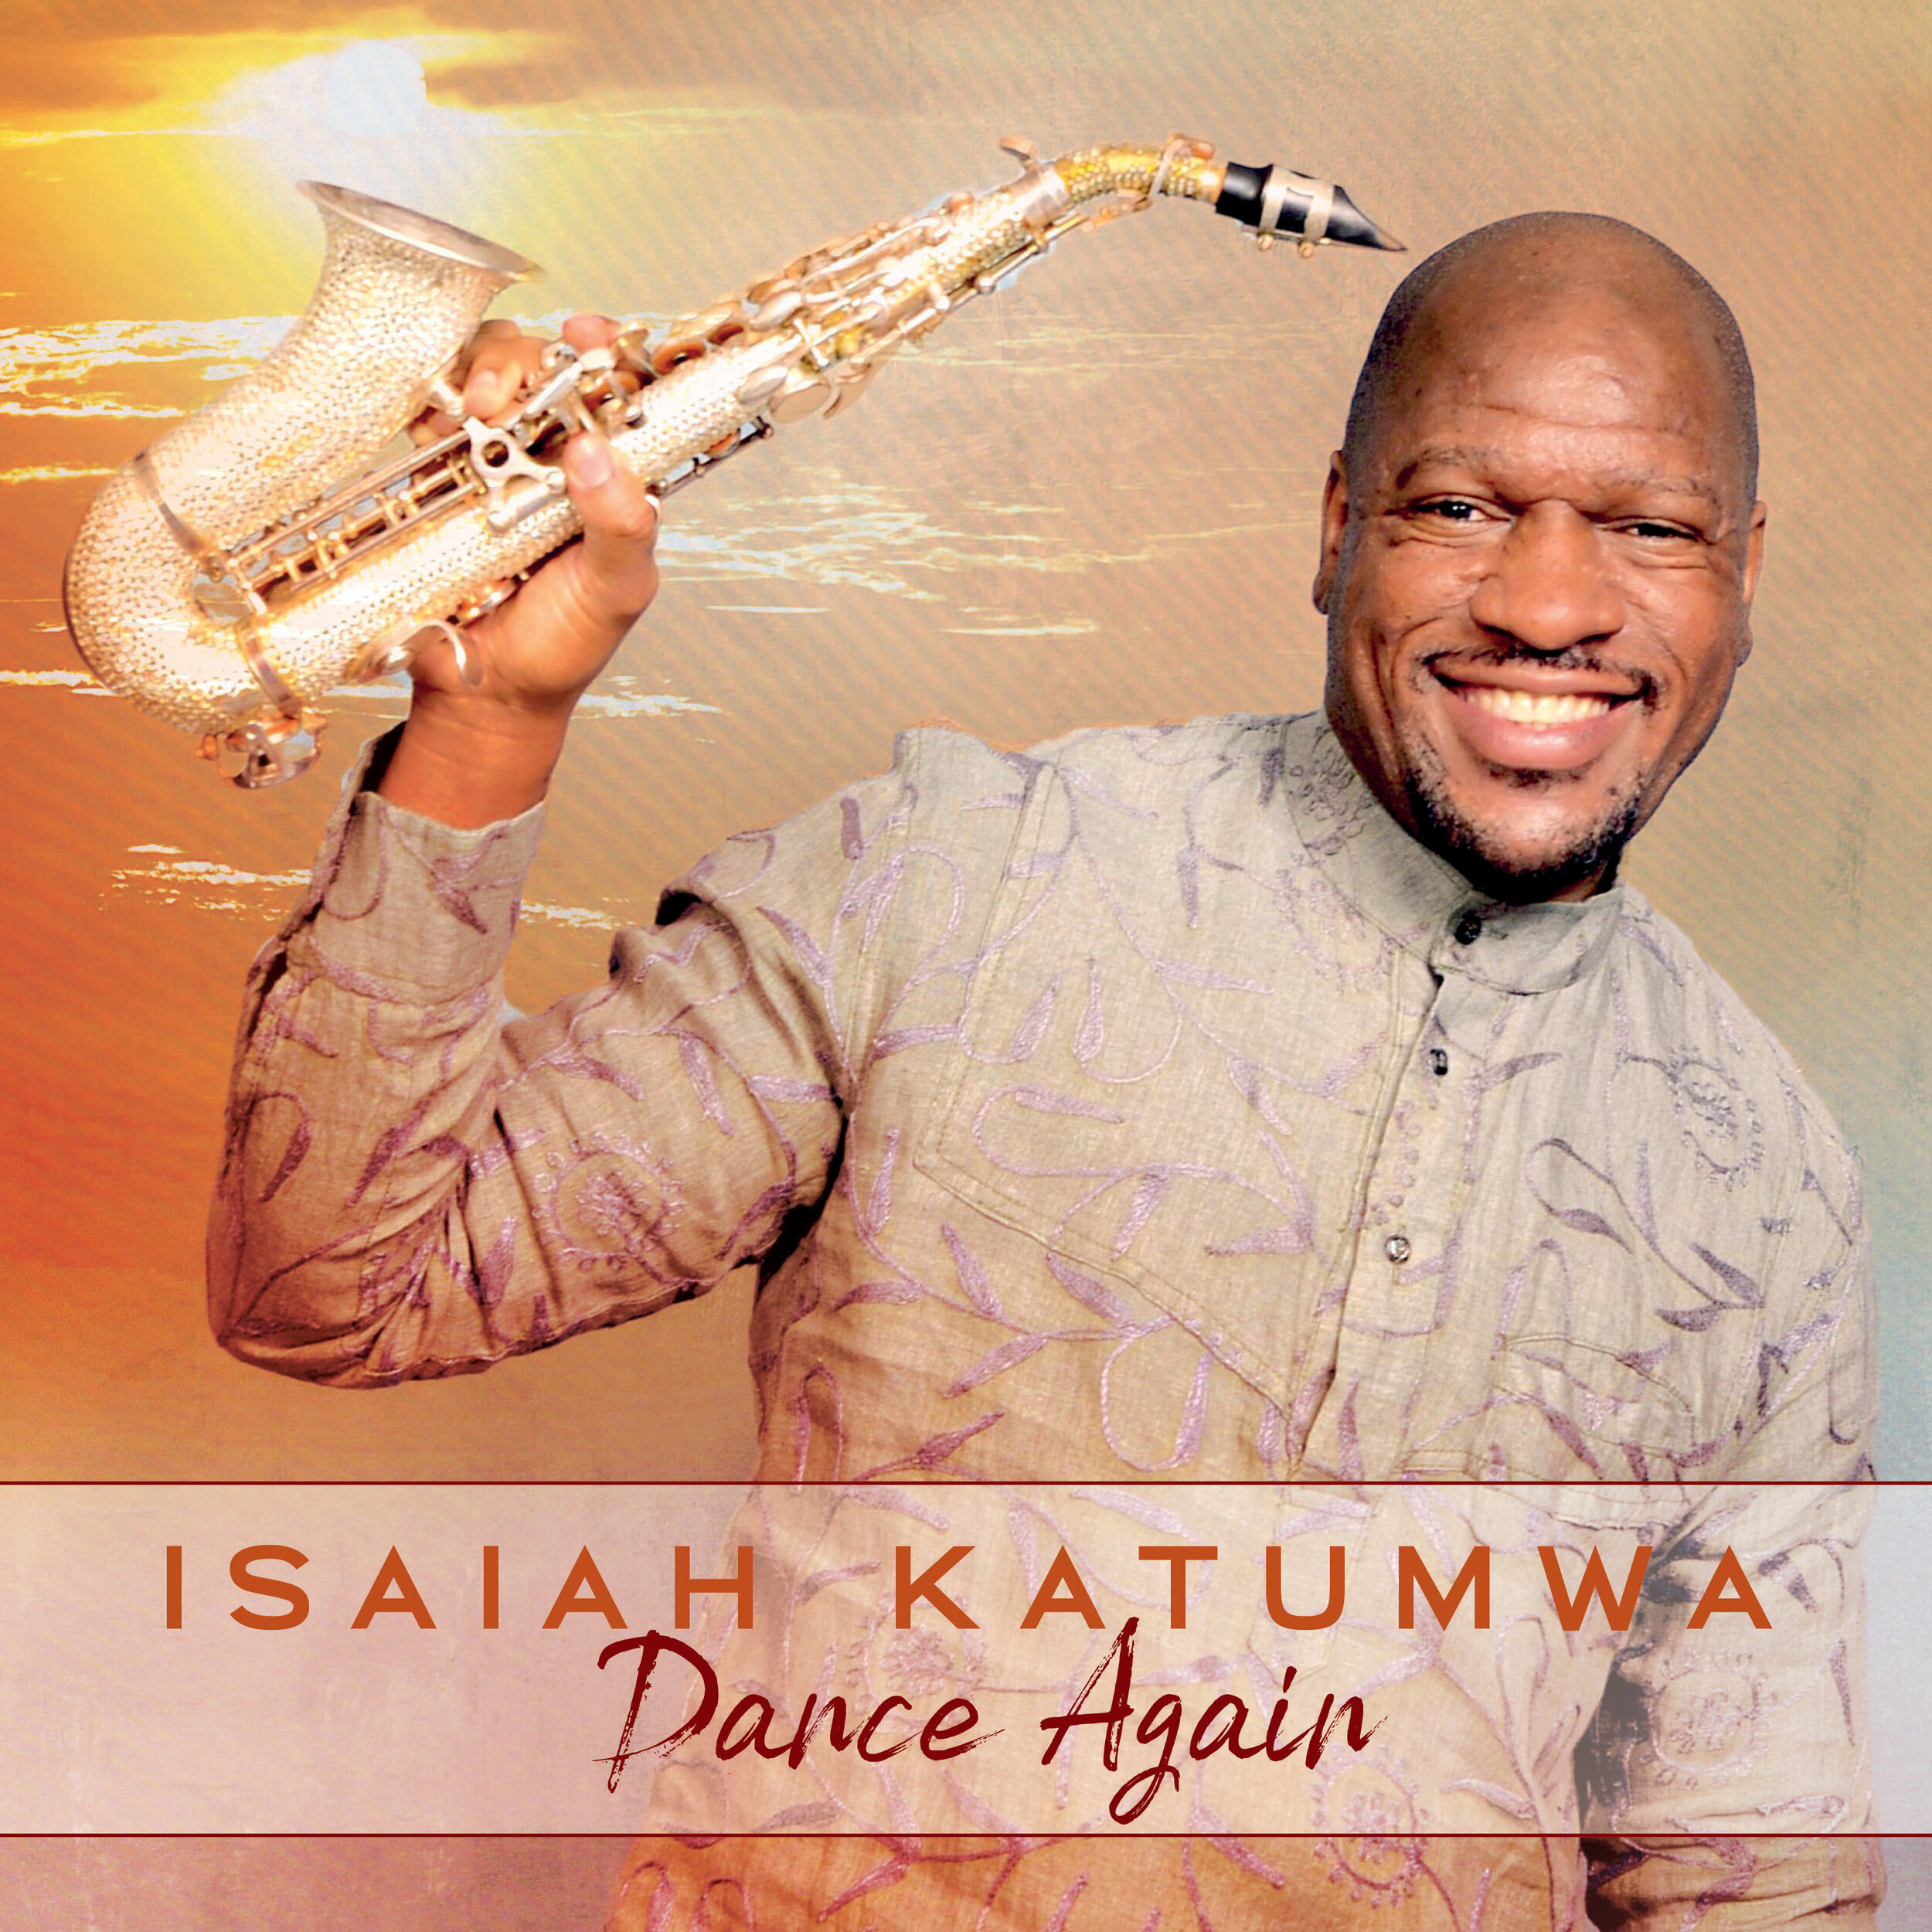 Isaiah Katumwa - Dance Again - Cover FINAL.jpg